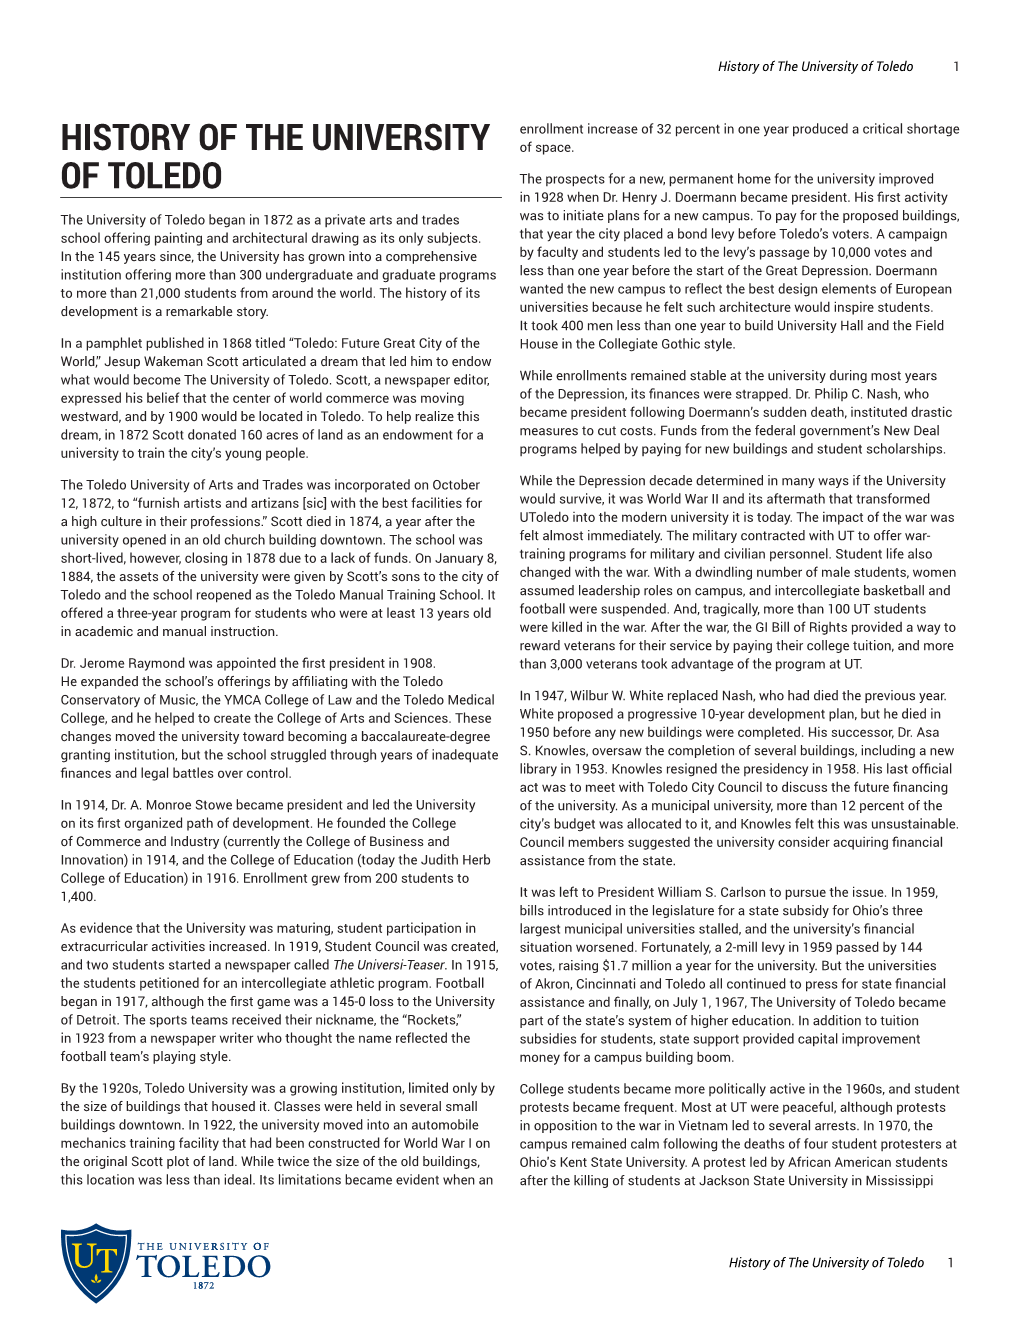 History of the University of Toledo 1